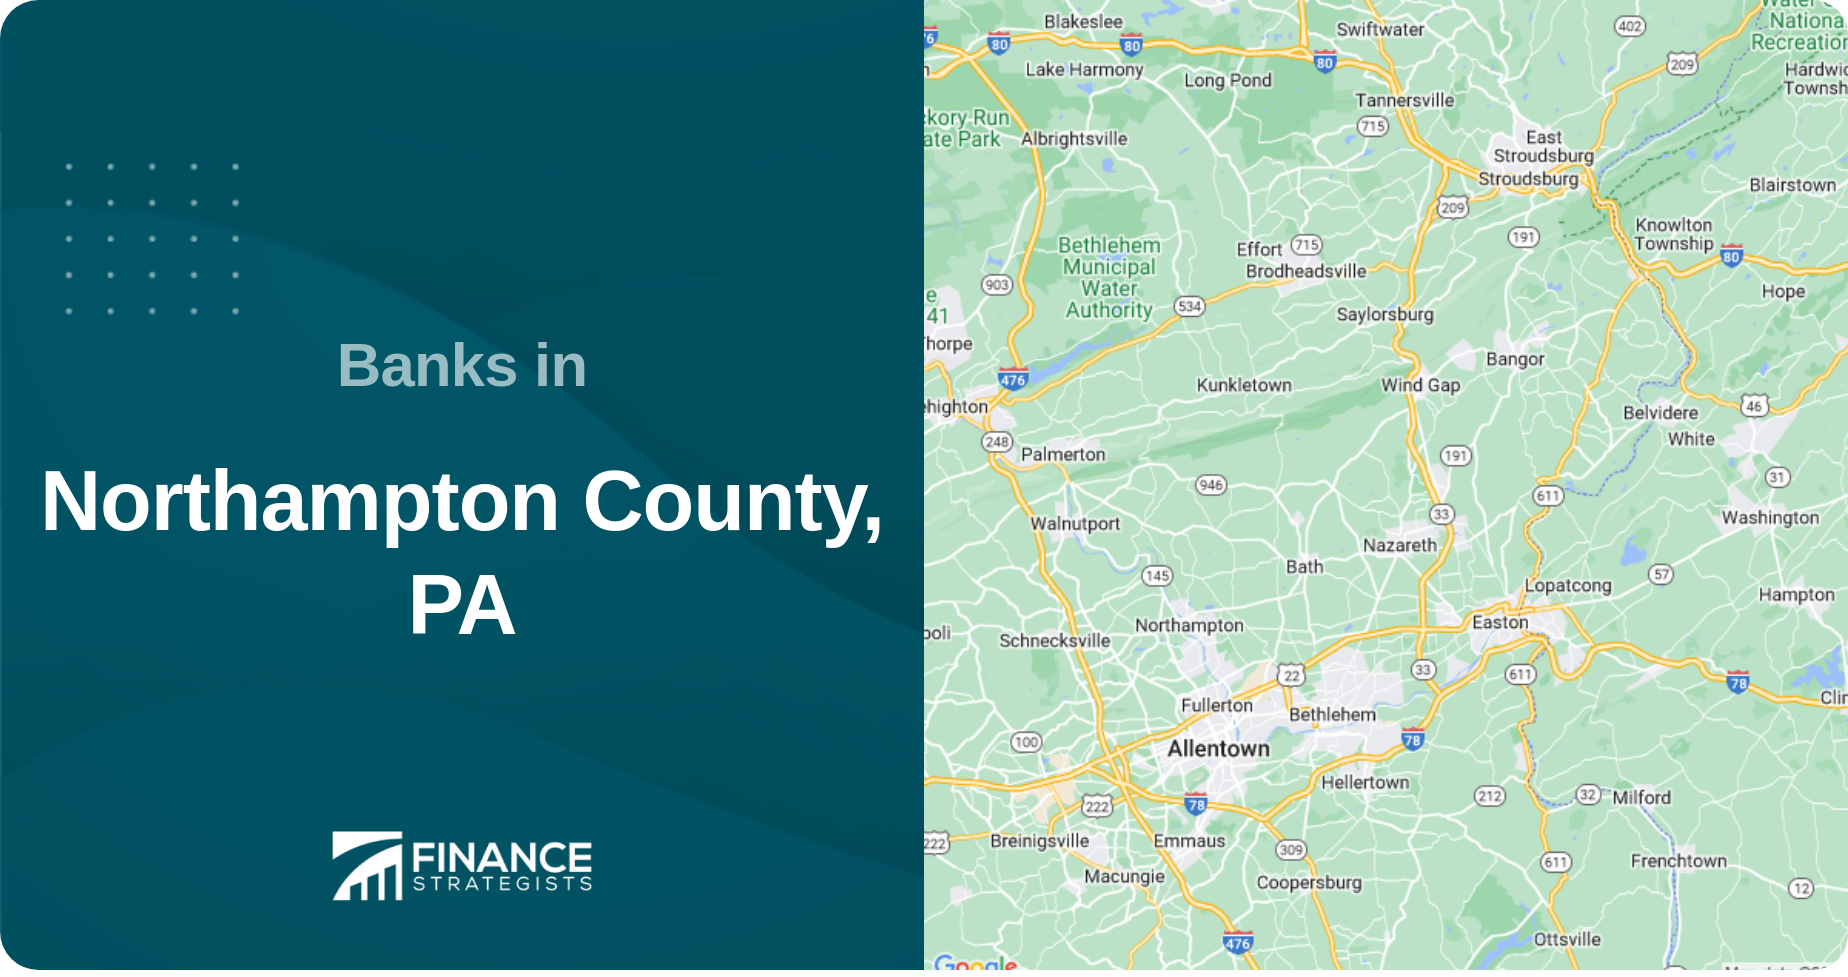 Banks in Northampton County, PA